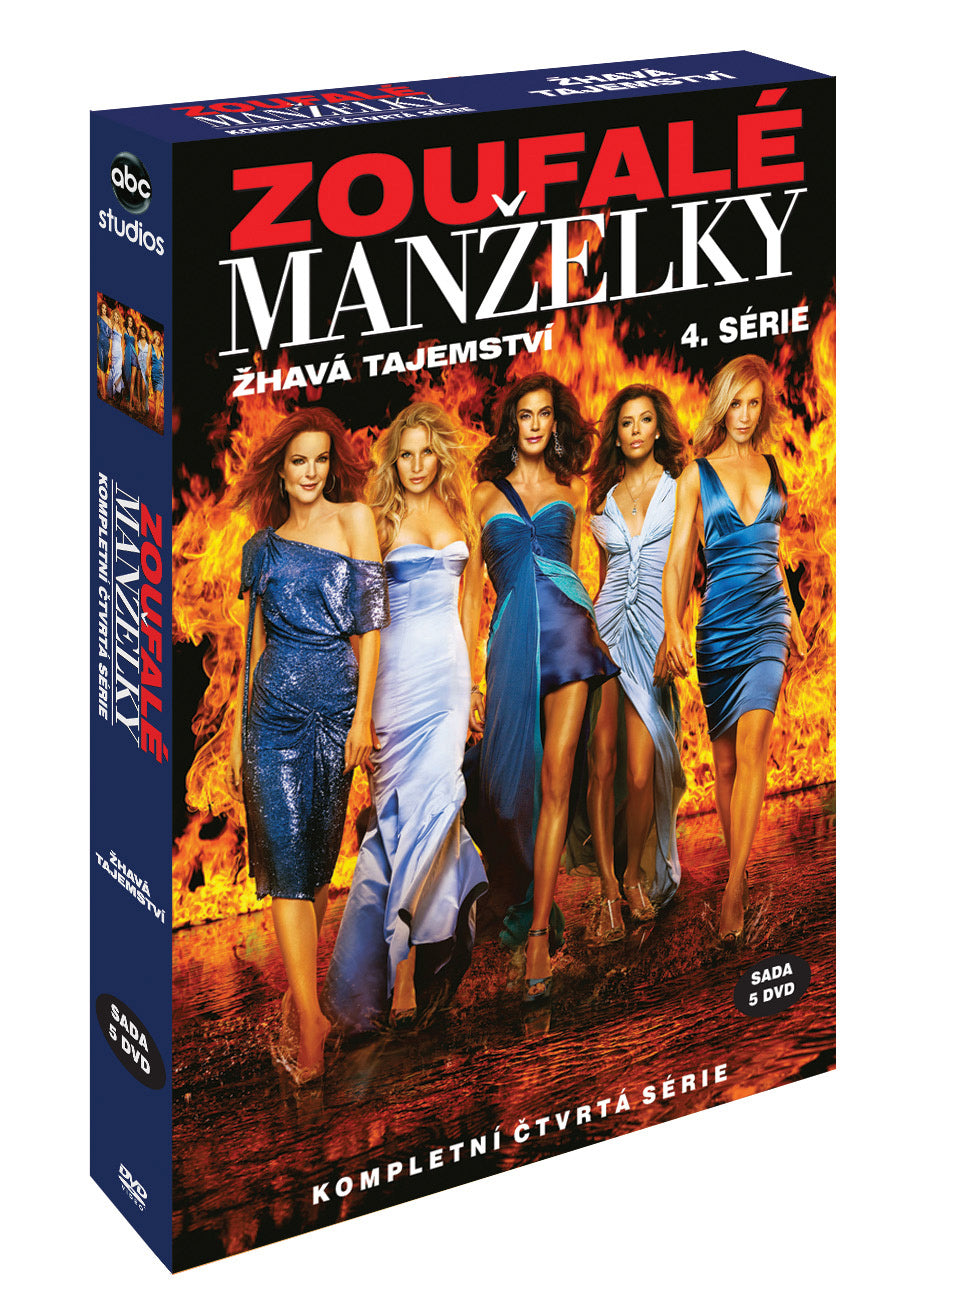 Zoufale Manzelky 4. Serie 5DVD / Desperate Housewifes Staffel 4